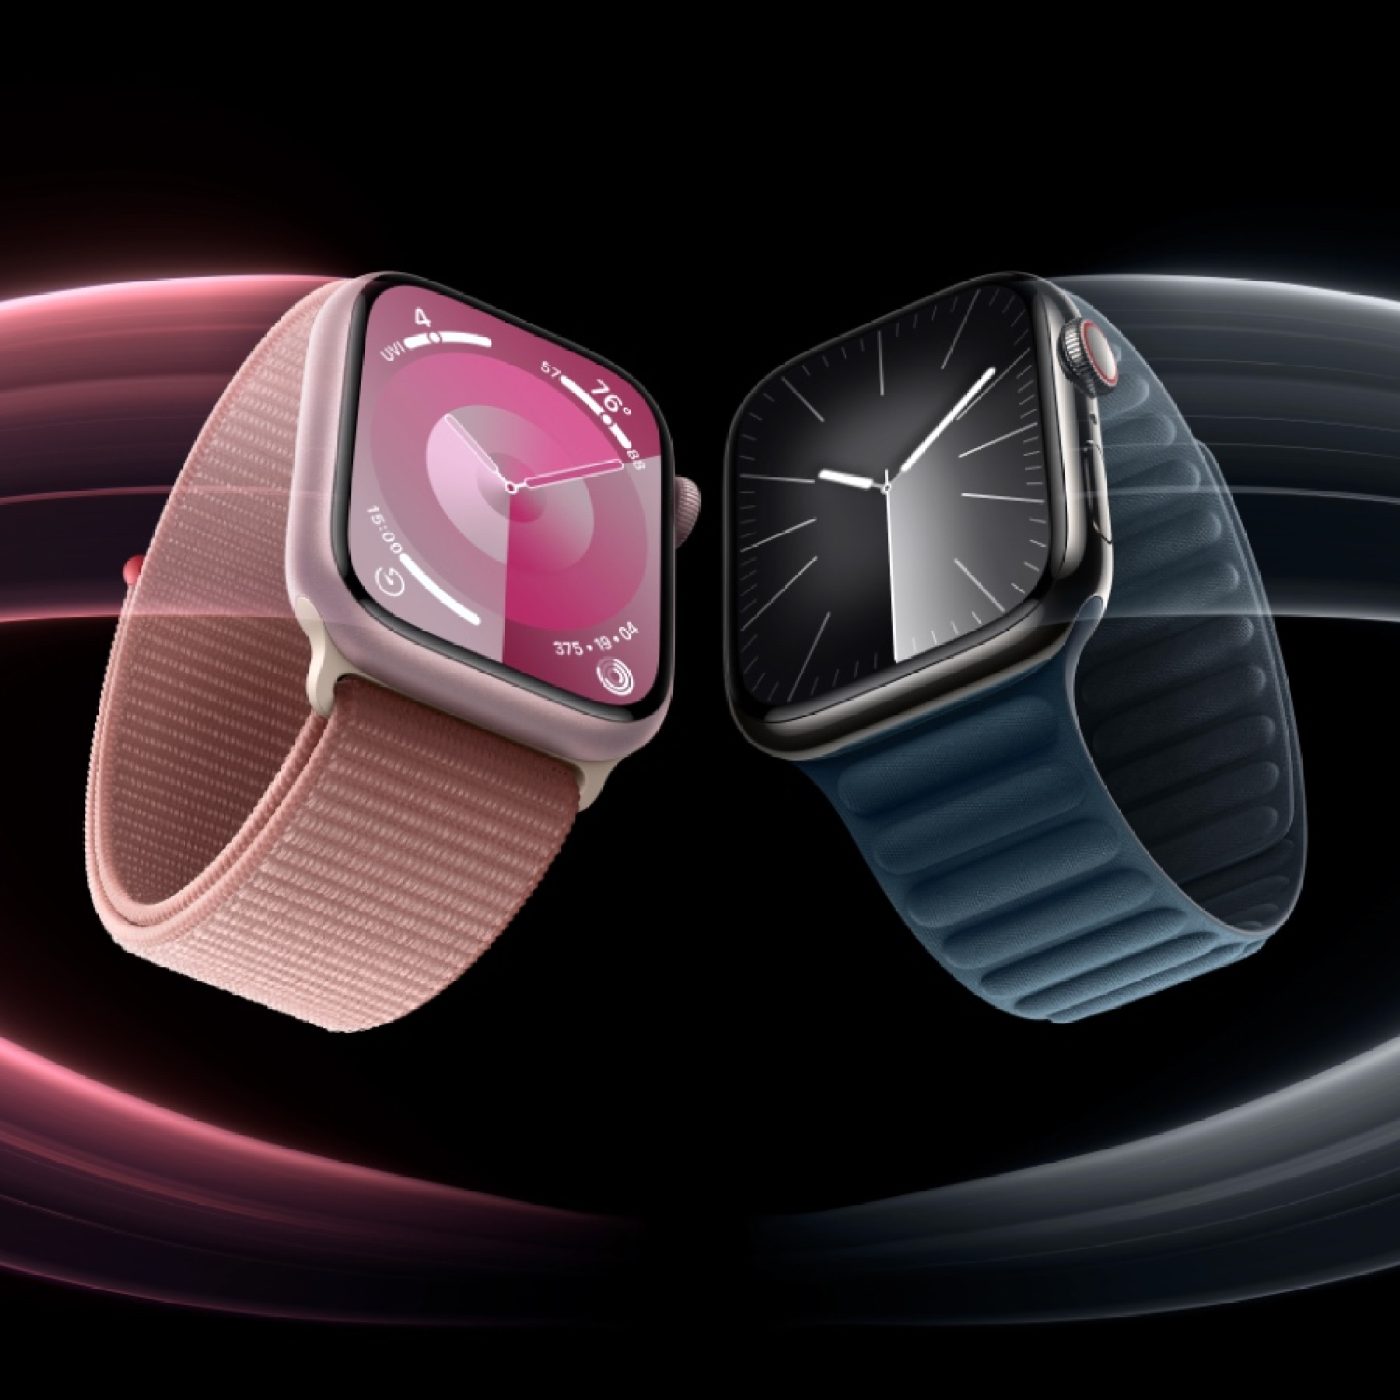 Apple event 2023 recap: iPhone 15 price, colors, Apple Watch Series 9